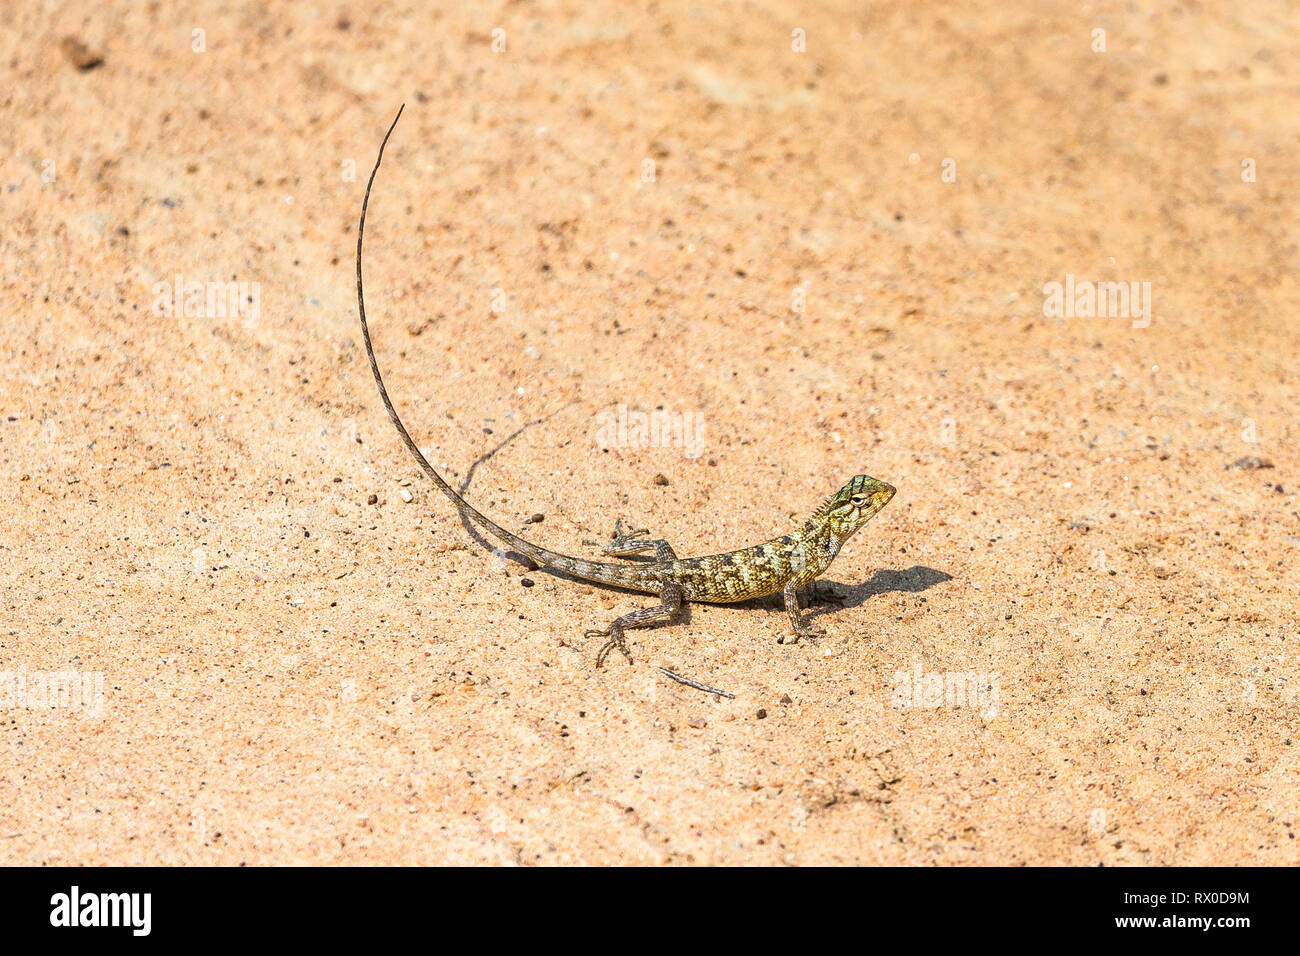 Sri lankan garden lizard hi-res stock photography and images - Alamy